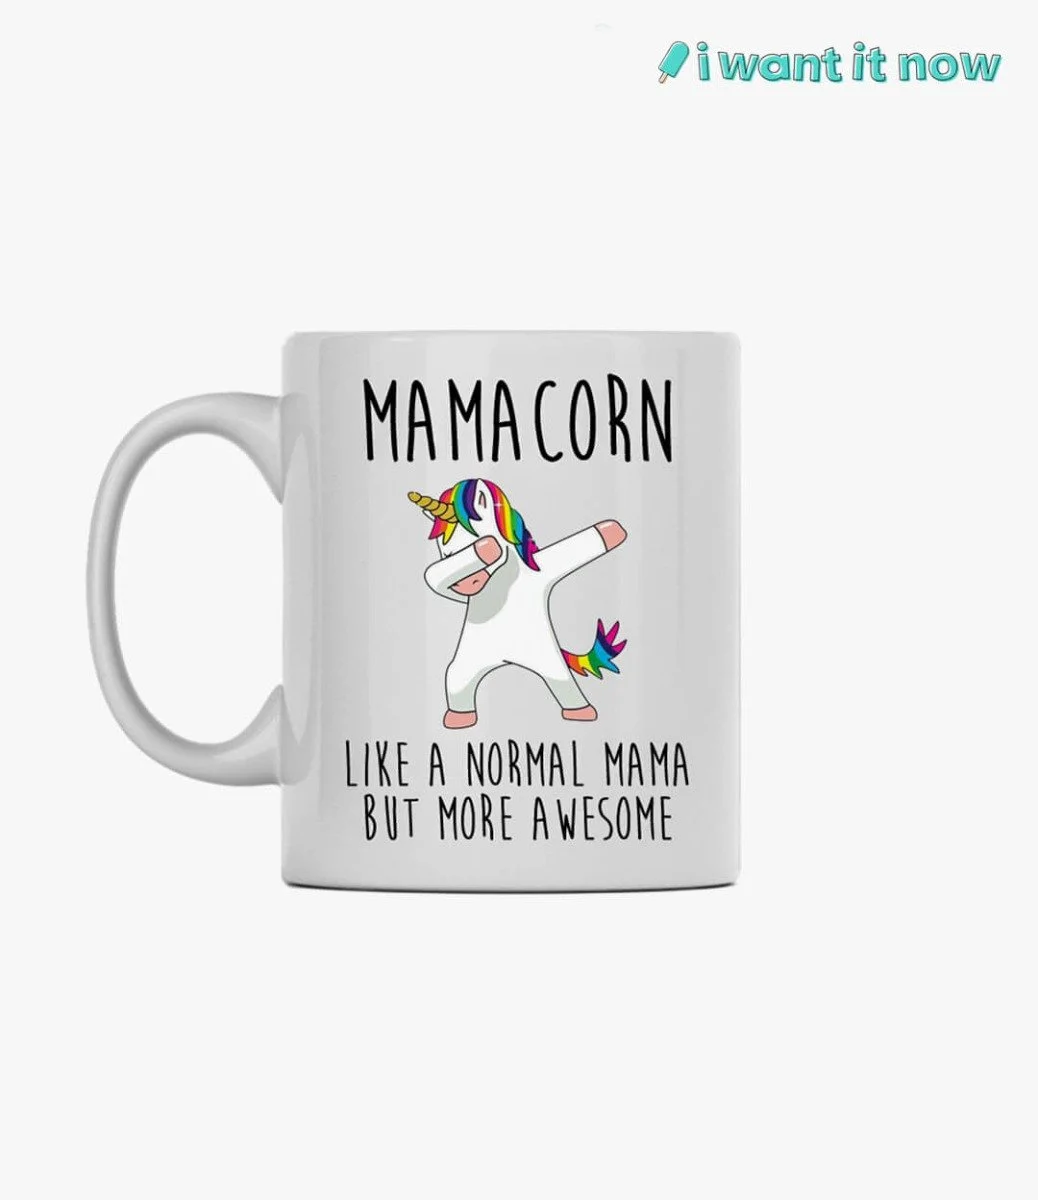 Mamacorn Mug By I Want It Now